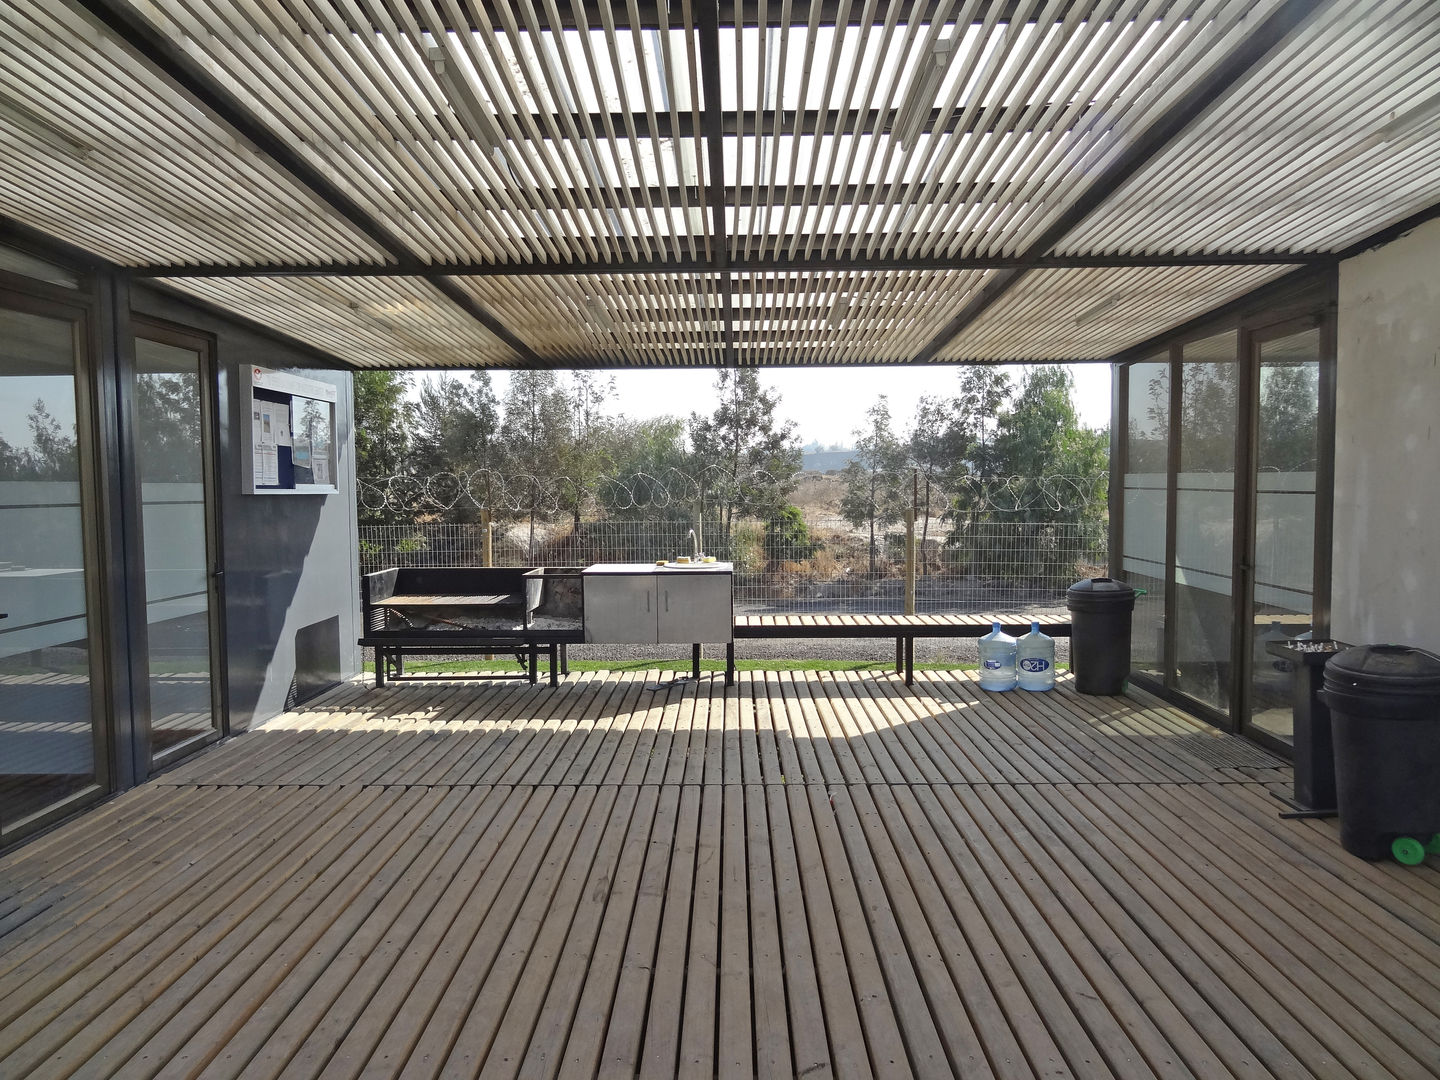 Oficinas Modulares Transportables, m2 estudio arquitectos - Santiago m2 estudio arquitectos - Santiago 樓梯